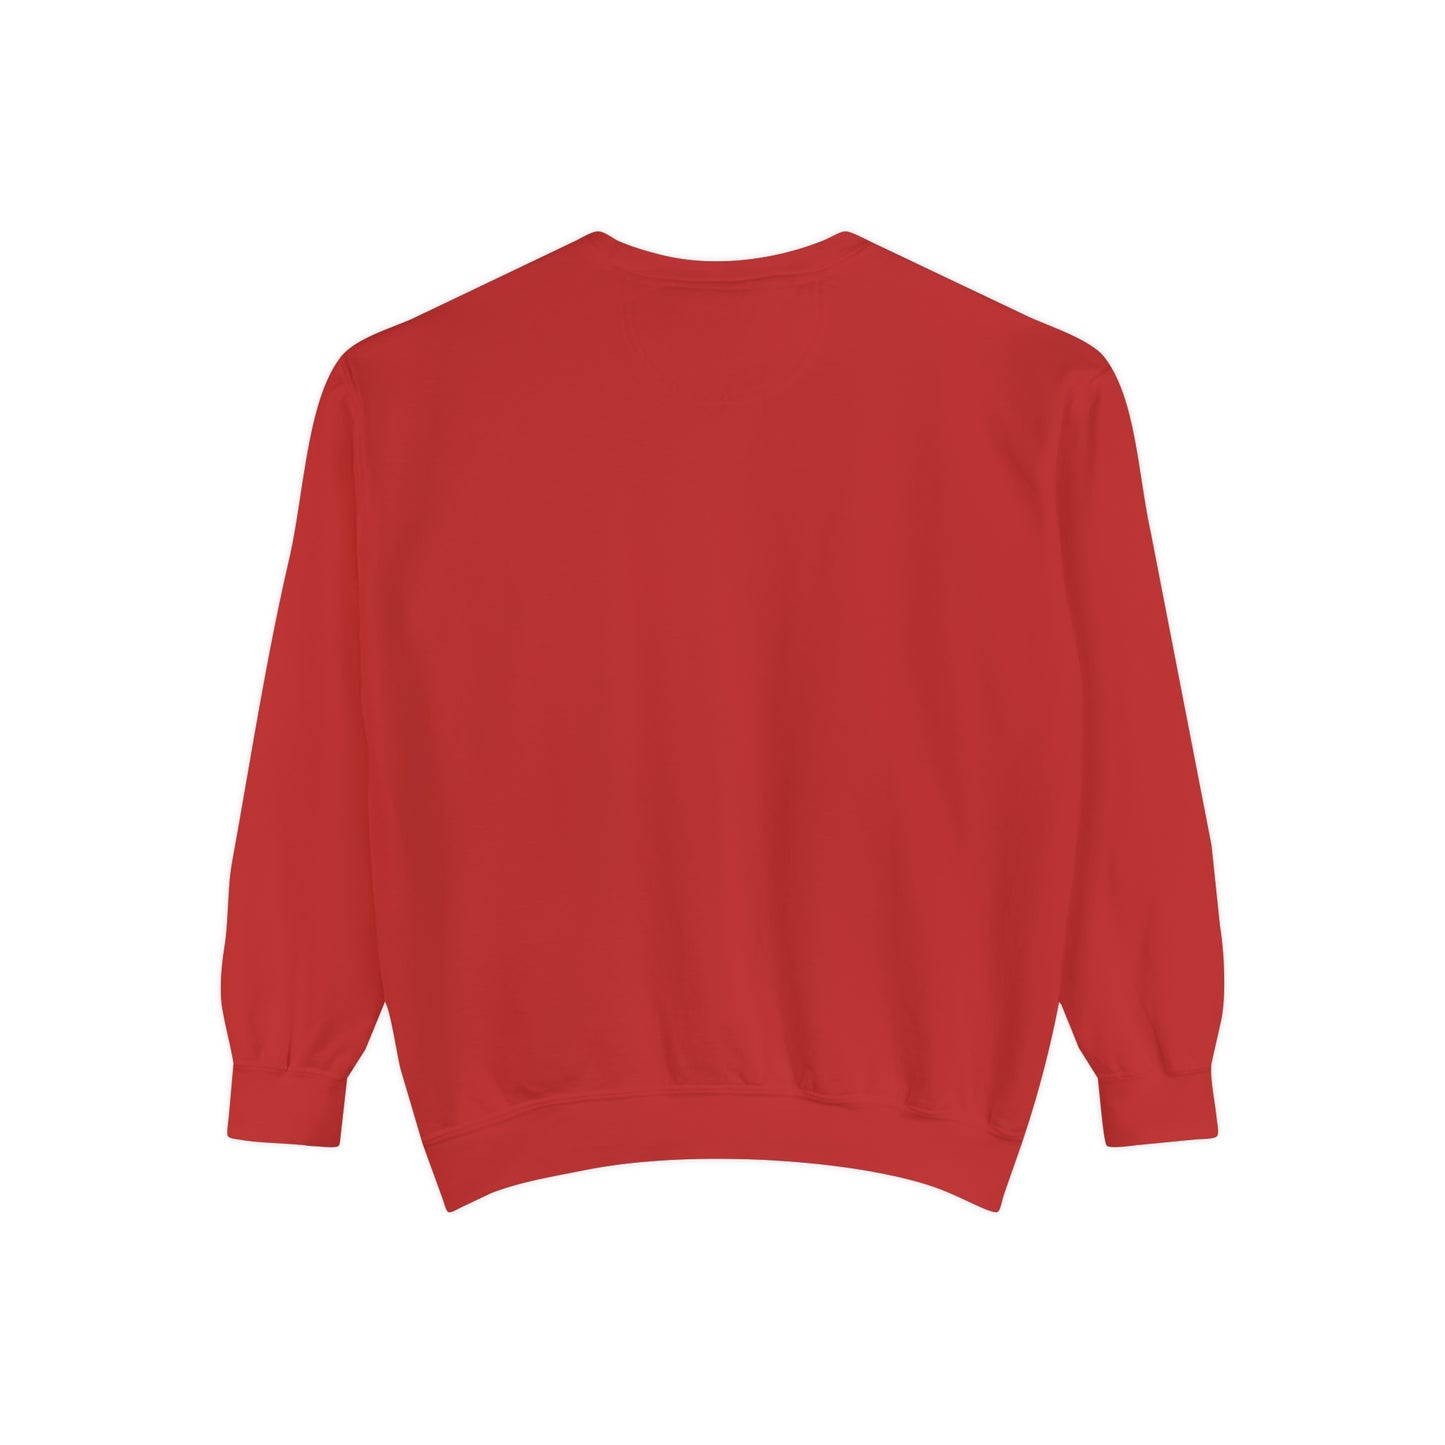 Unisex Comfort Colors Crewneck Sweatshirt | CSHL Knot Logo